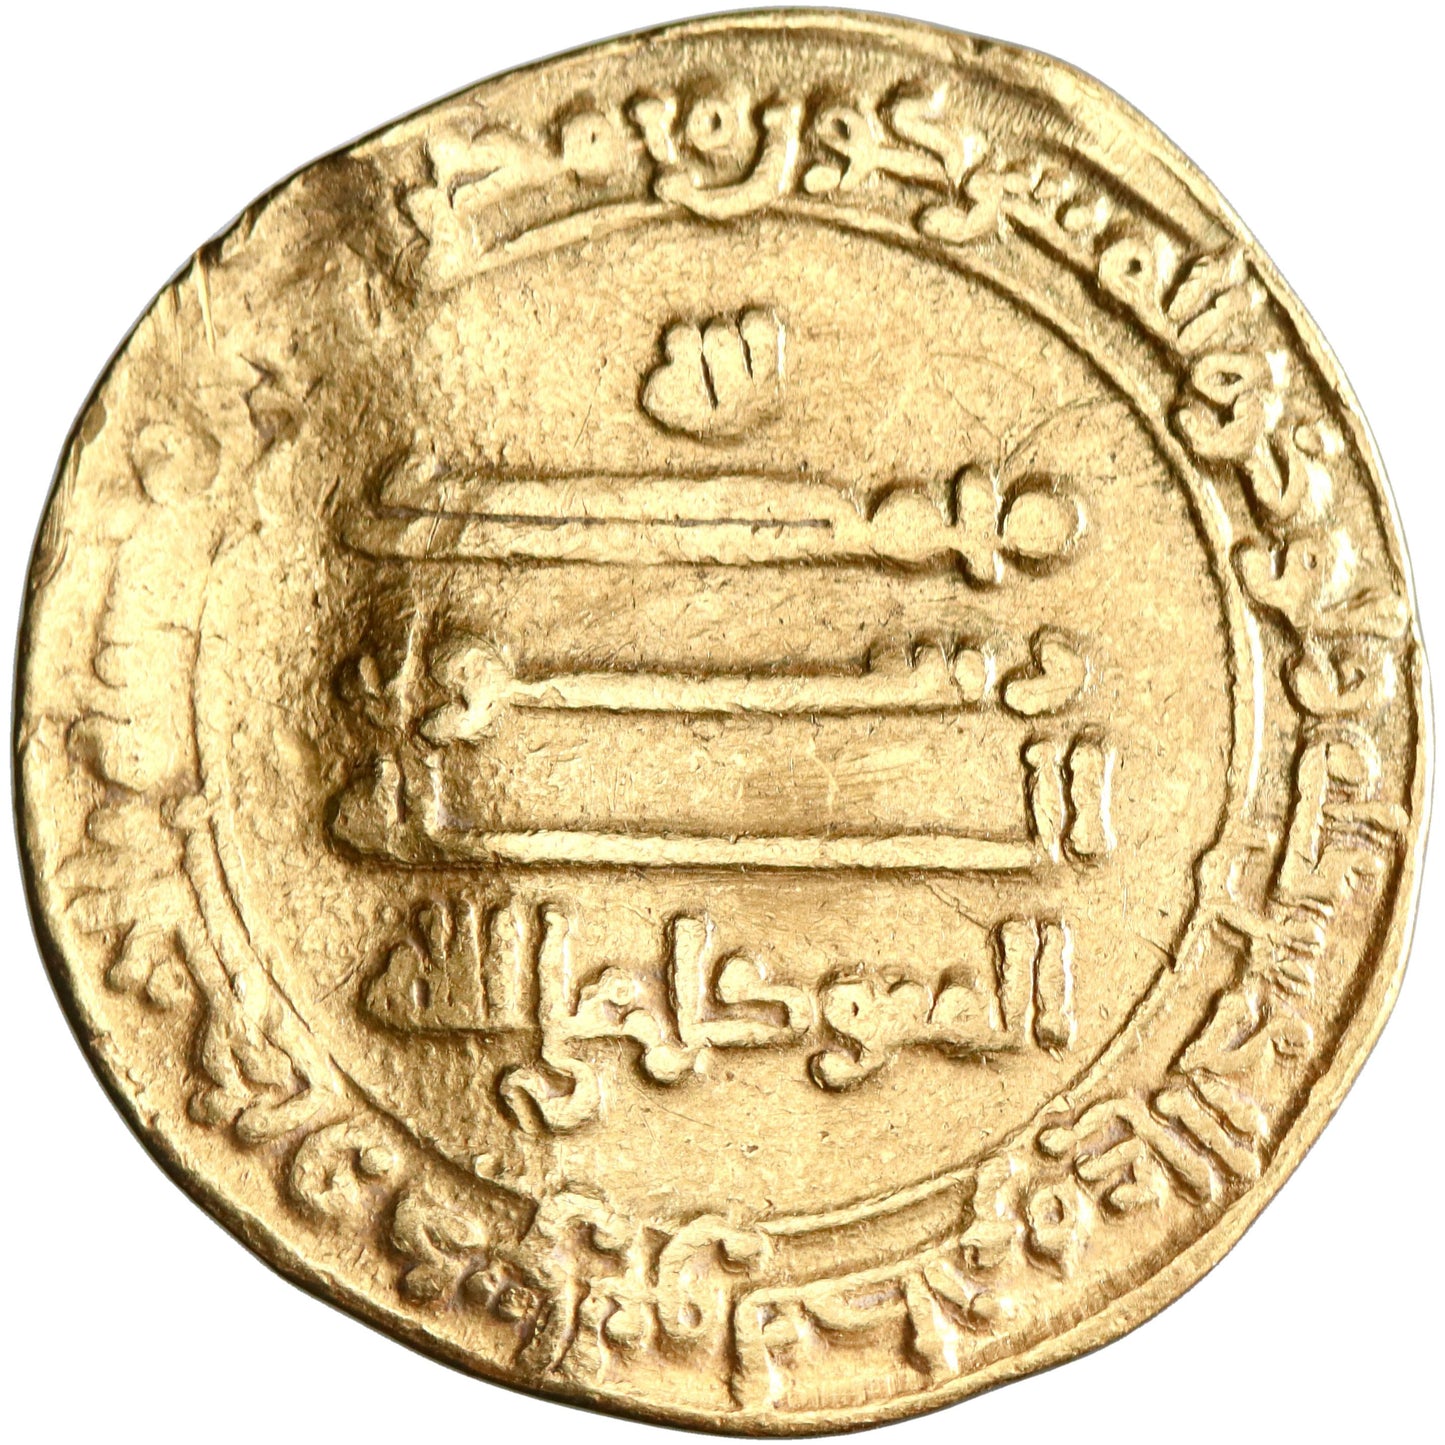 Abbasid, al-Mutawakkil, gold dinar, Marw (Merv) mint, AH 237, citing Abu 'Abd Allah